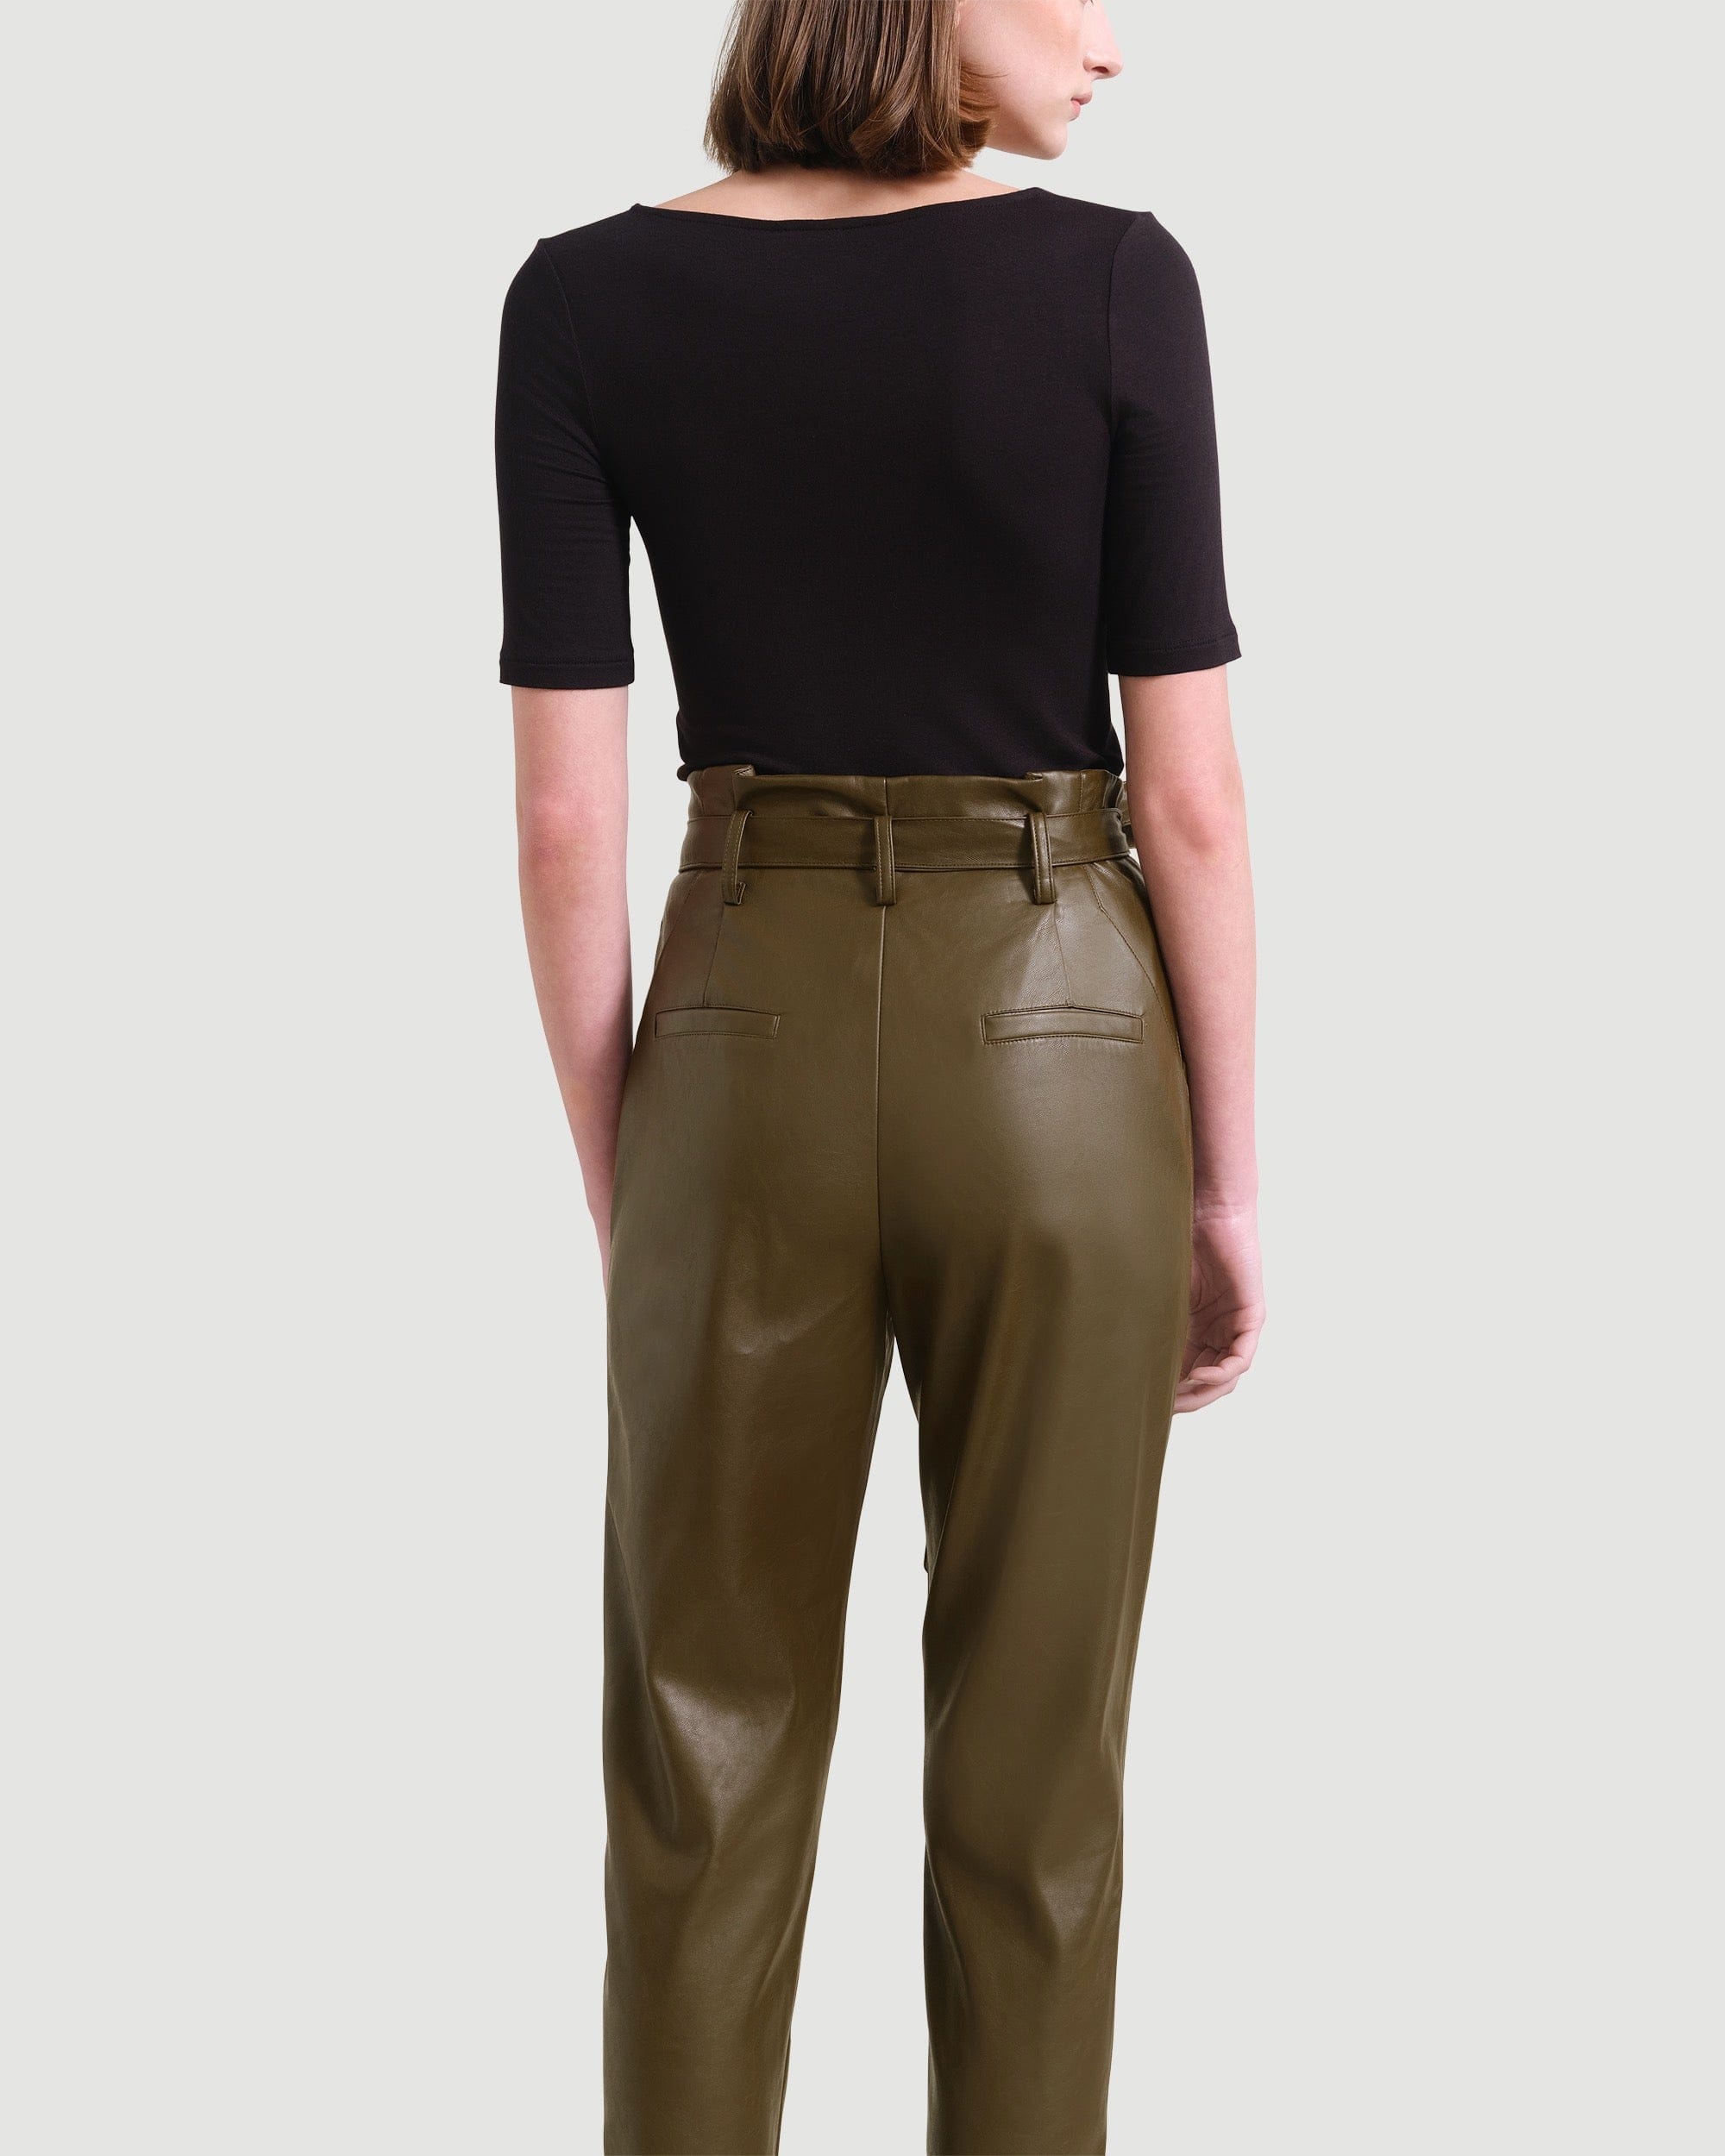 Modern Citizen Women's Bethany Paperbag Trousers